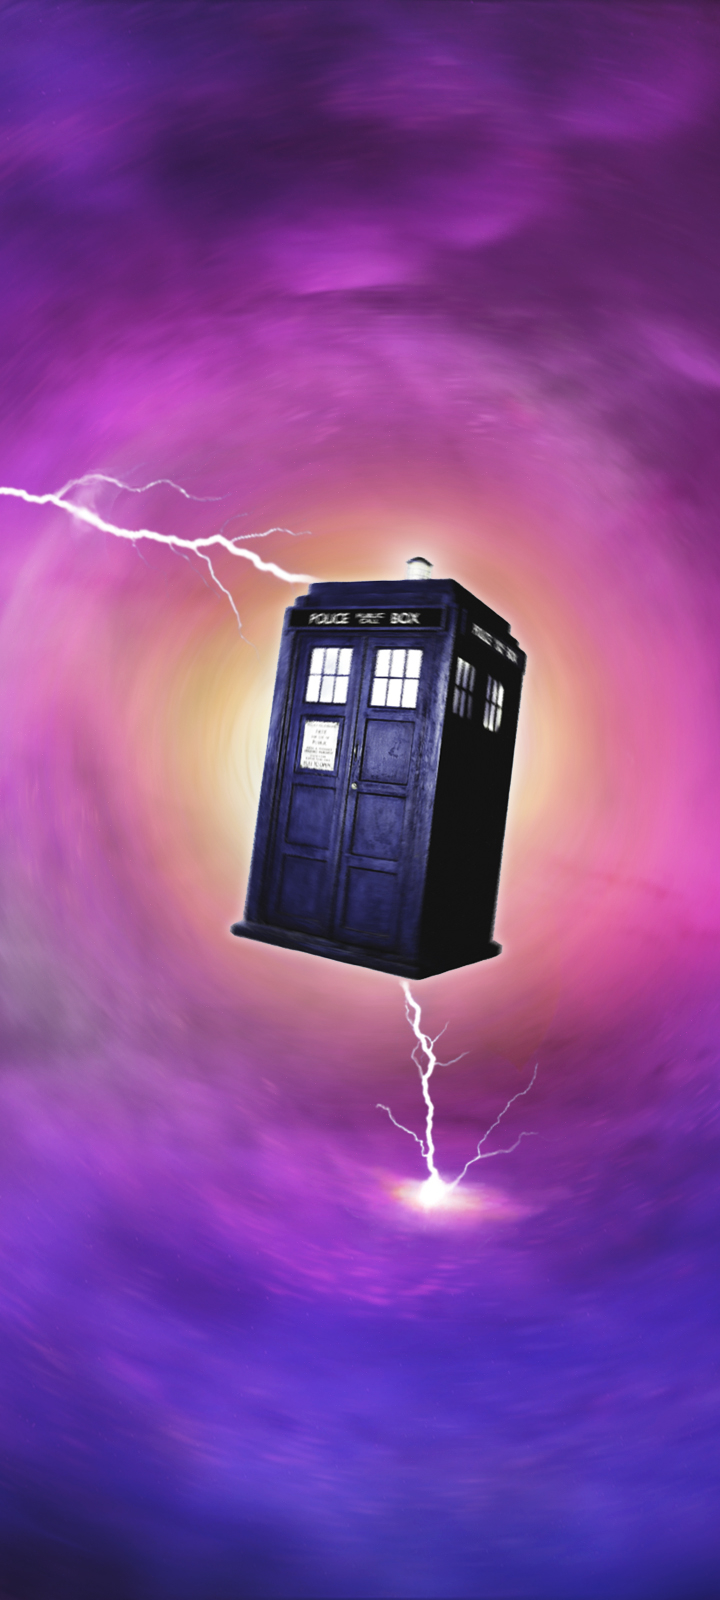 tardis, tv show, doctor who, telephone booth, lightning